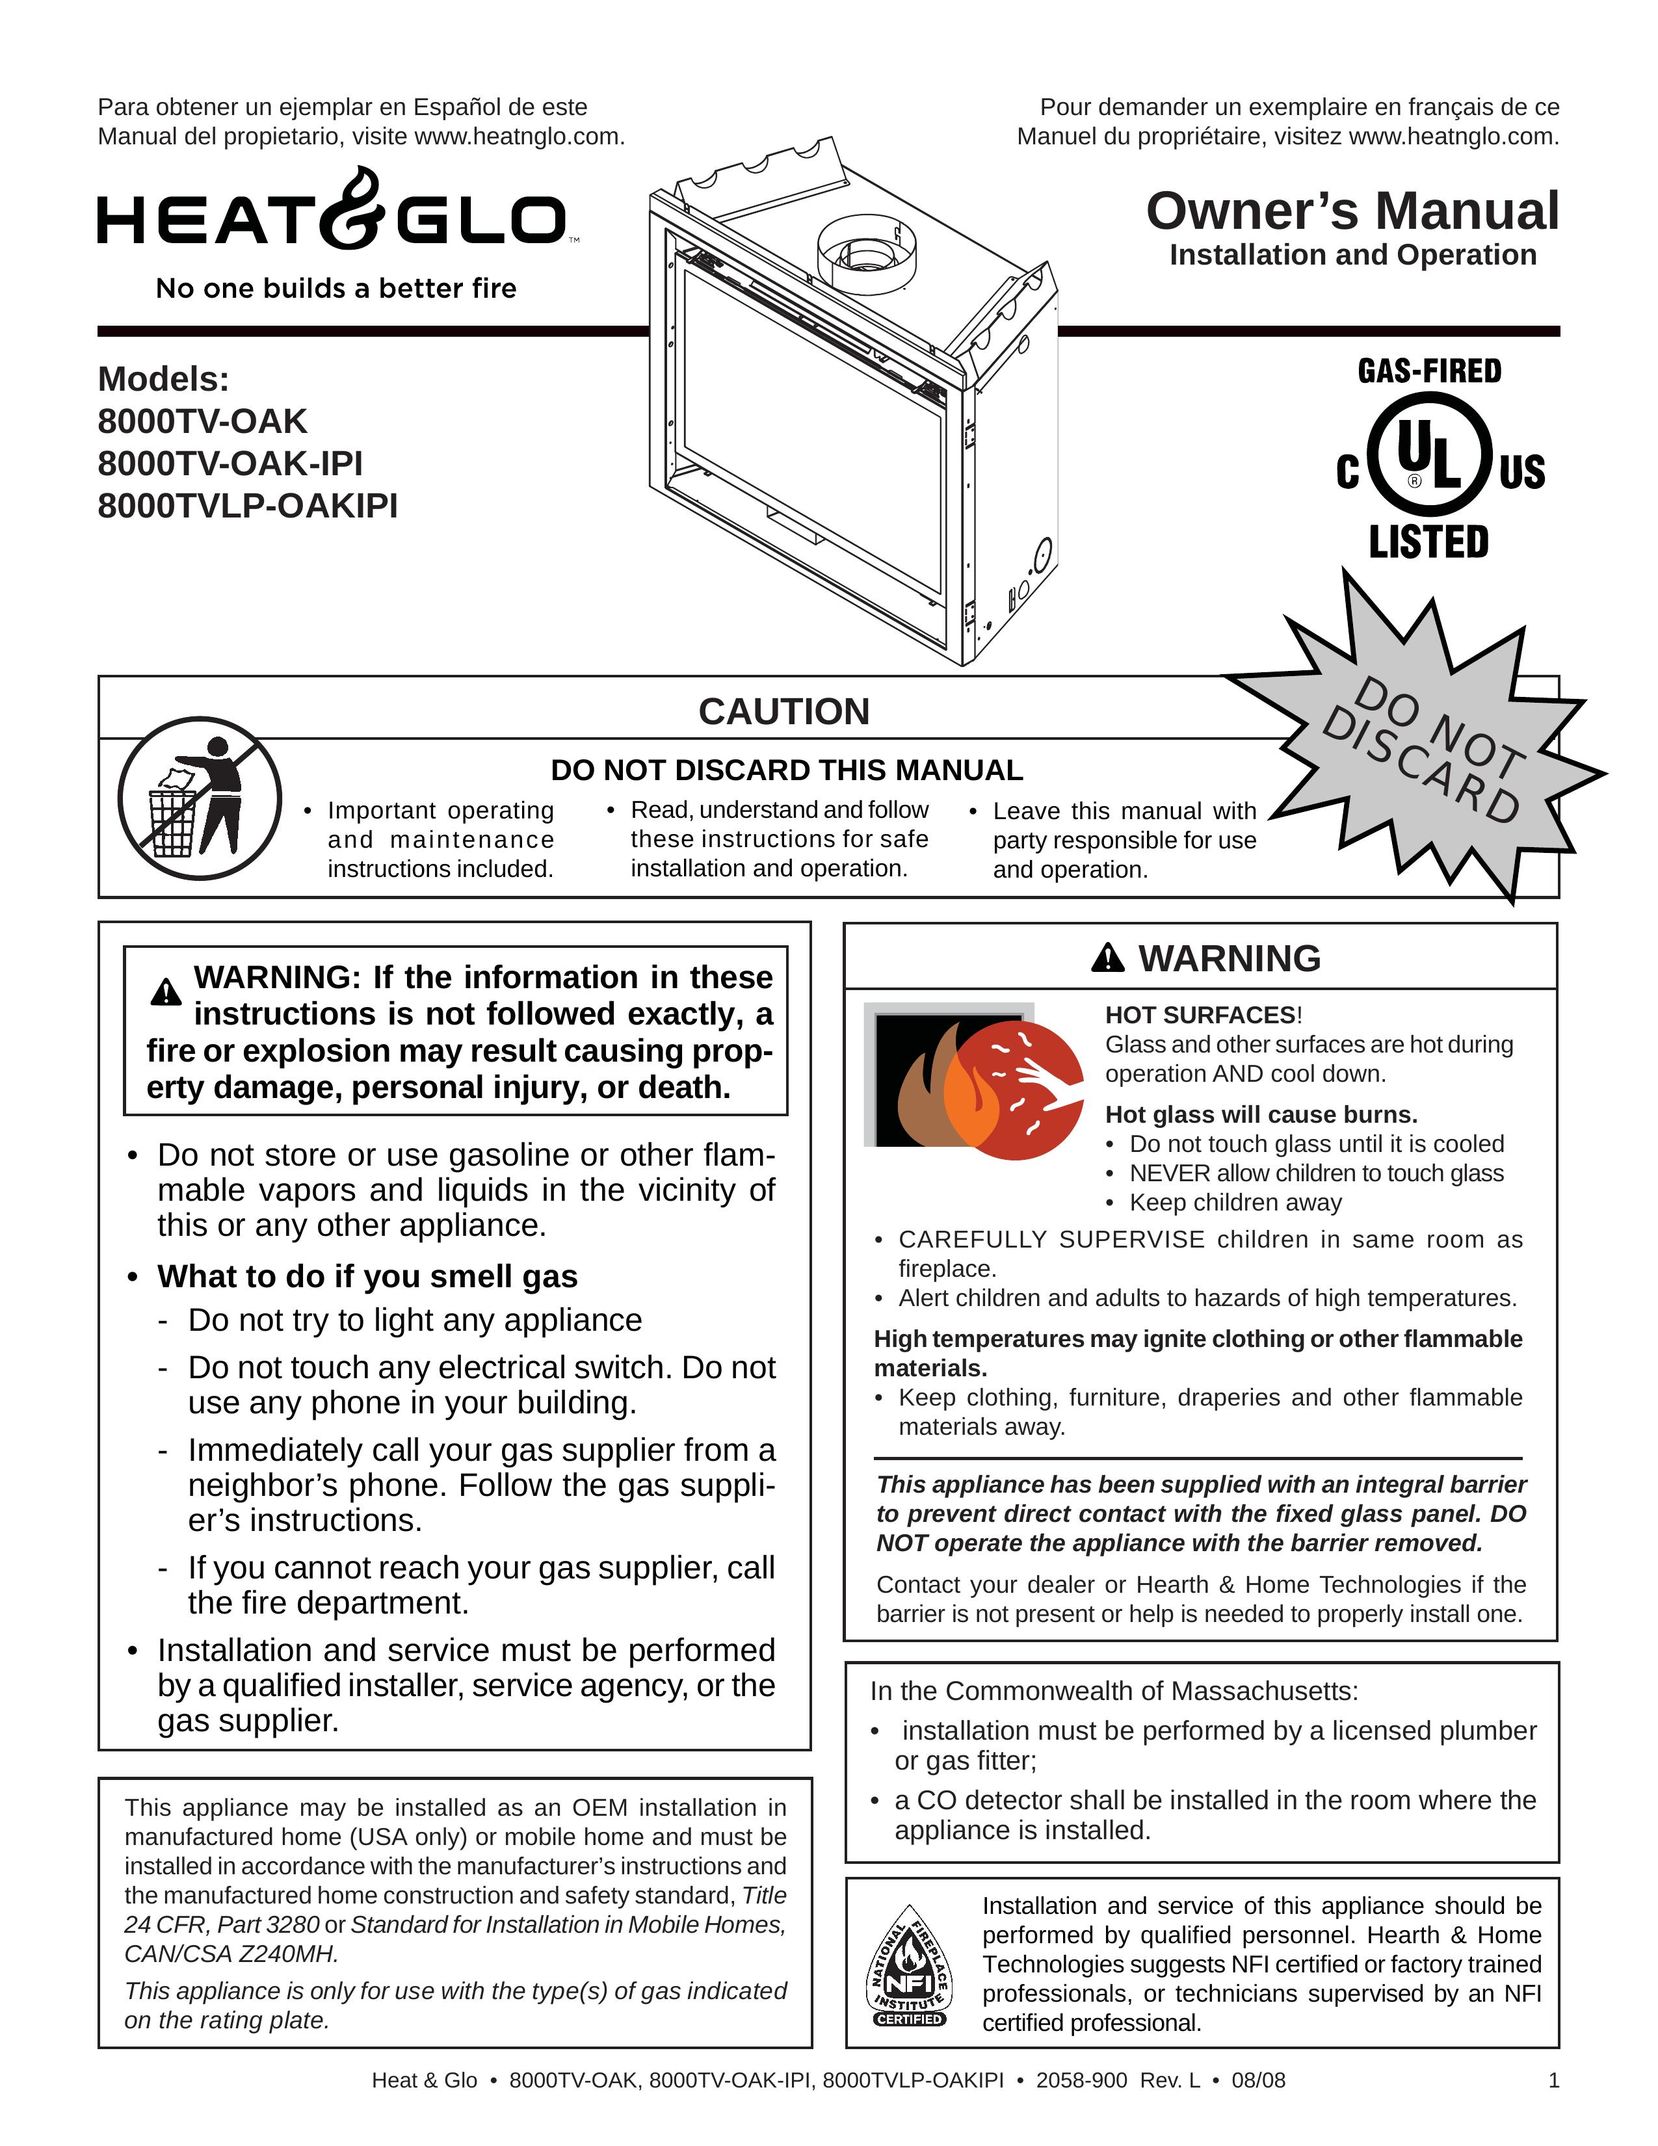 Heat & Glo LifeStyle 8000TV-OAK-IPI Gas Heater User Manual